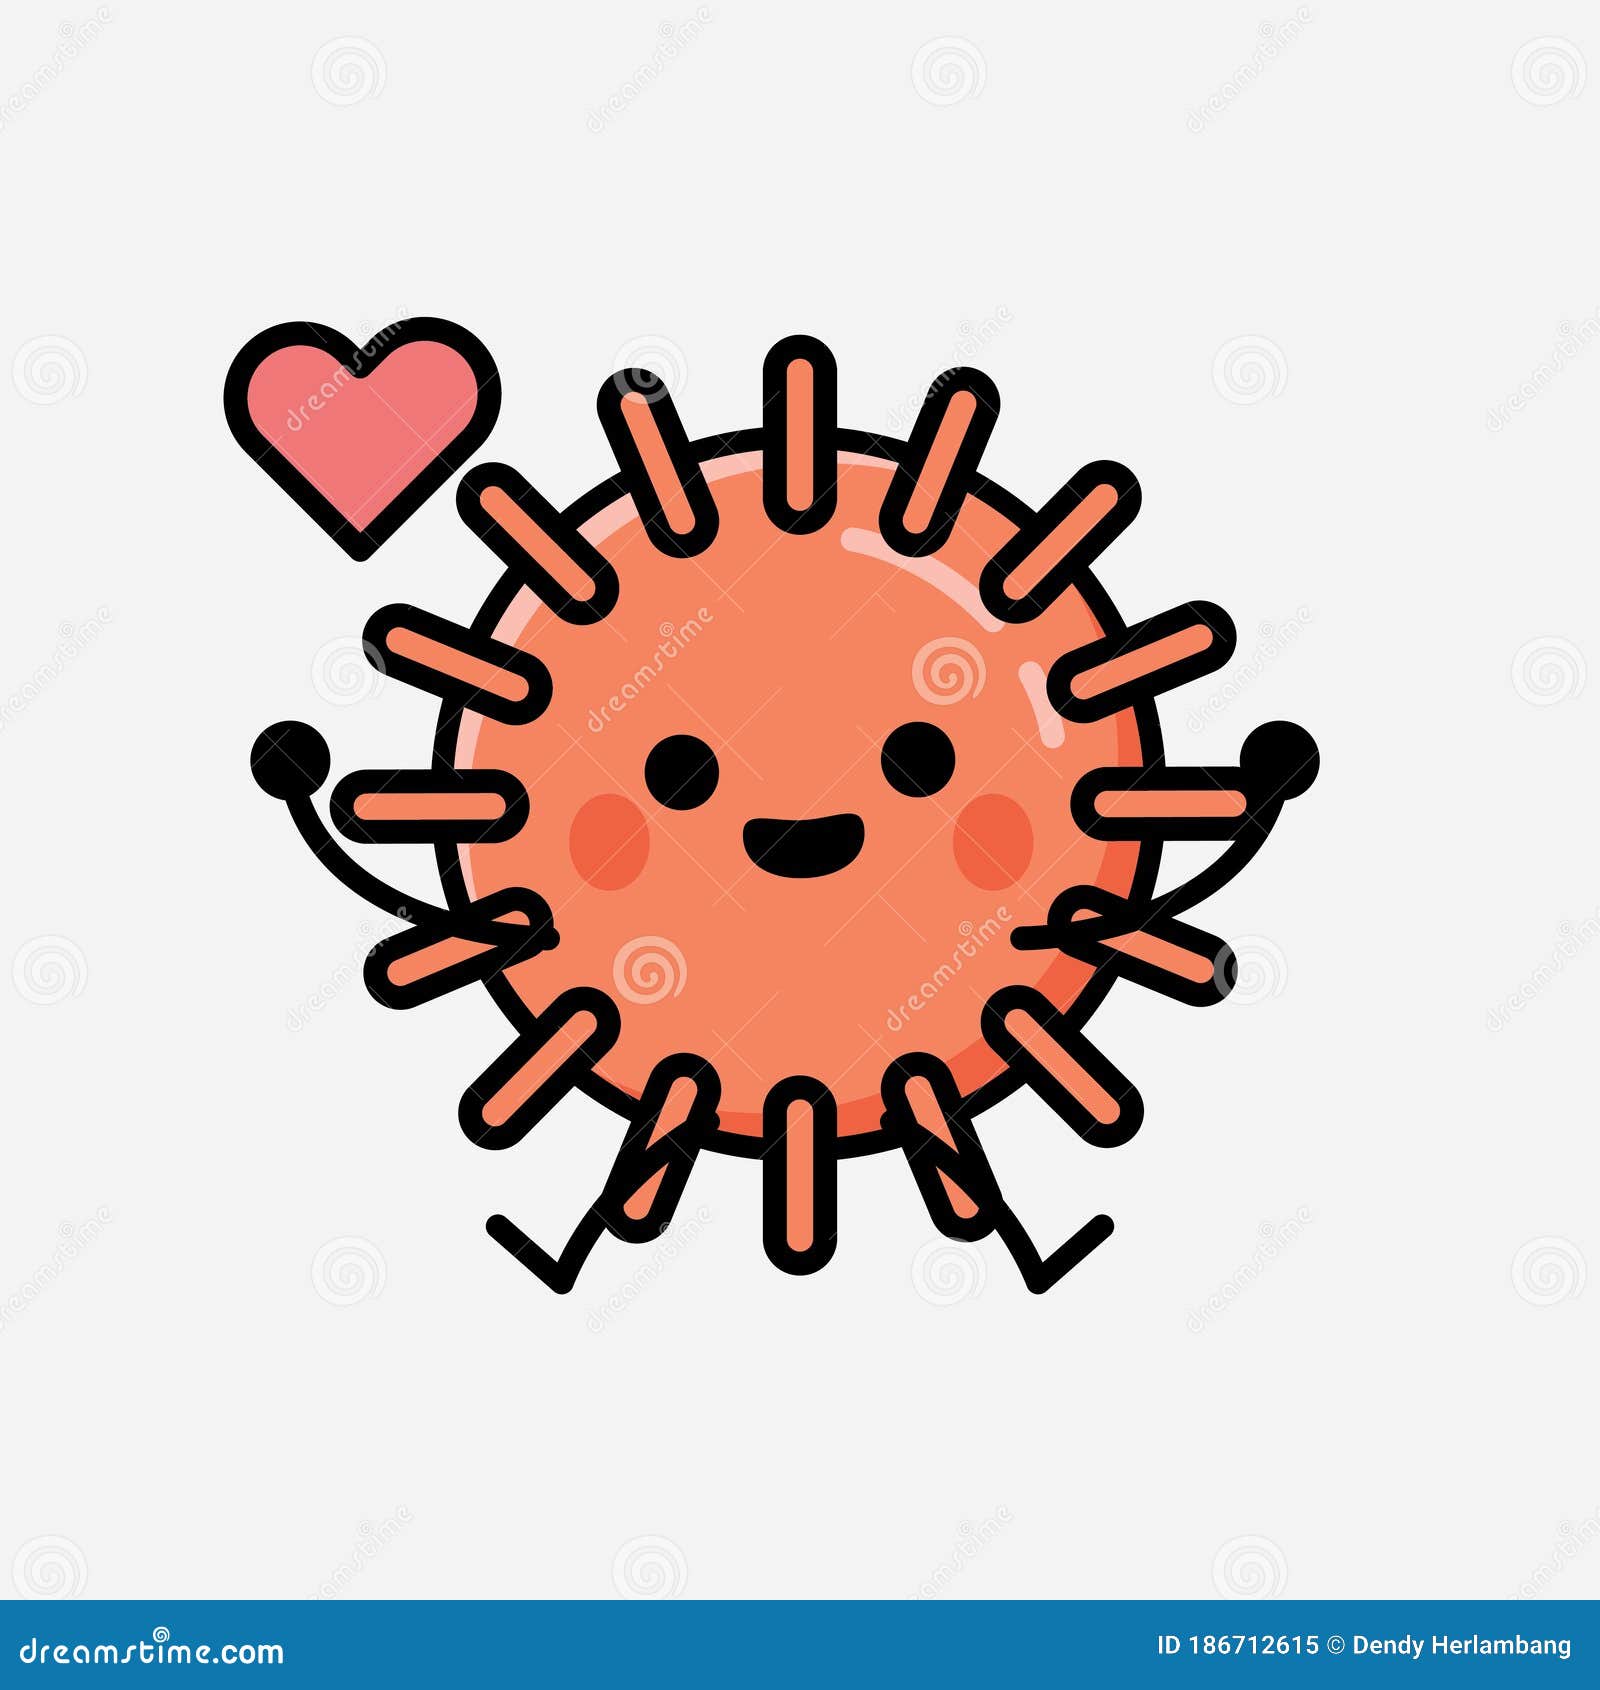 Cute Virus Mascot Vector Character in Flat Design Style Stock Vector ...